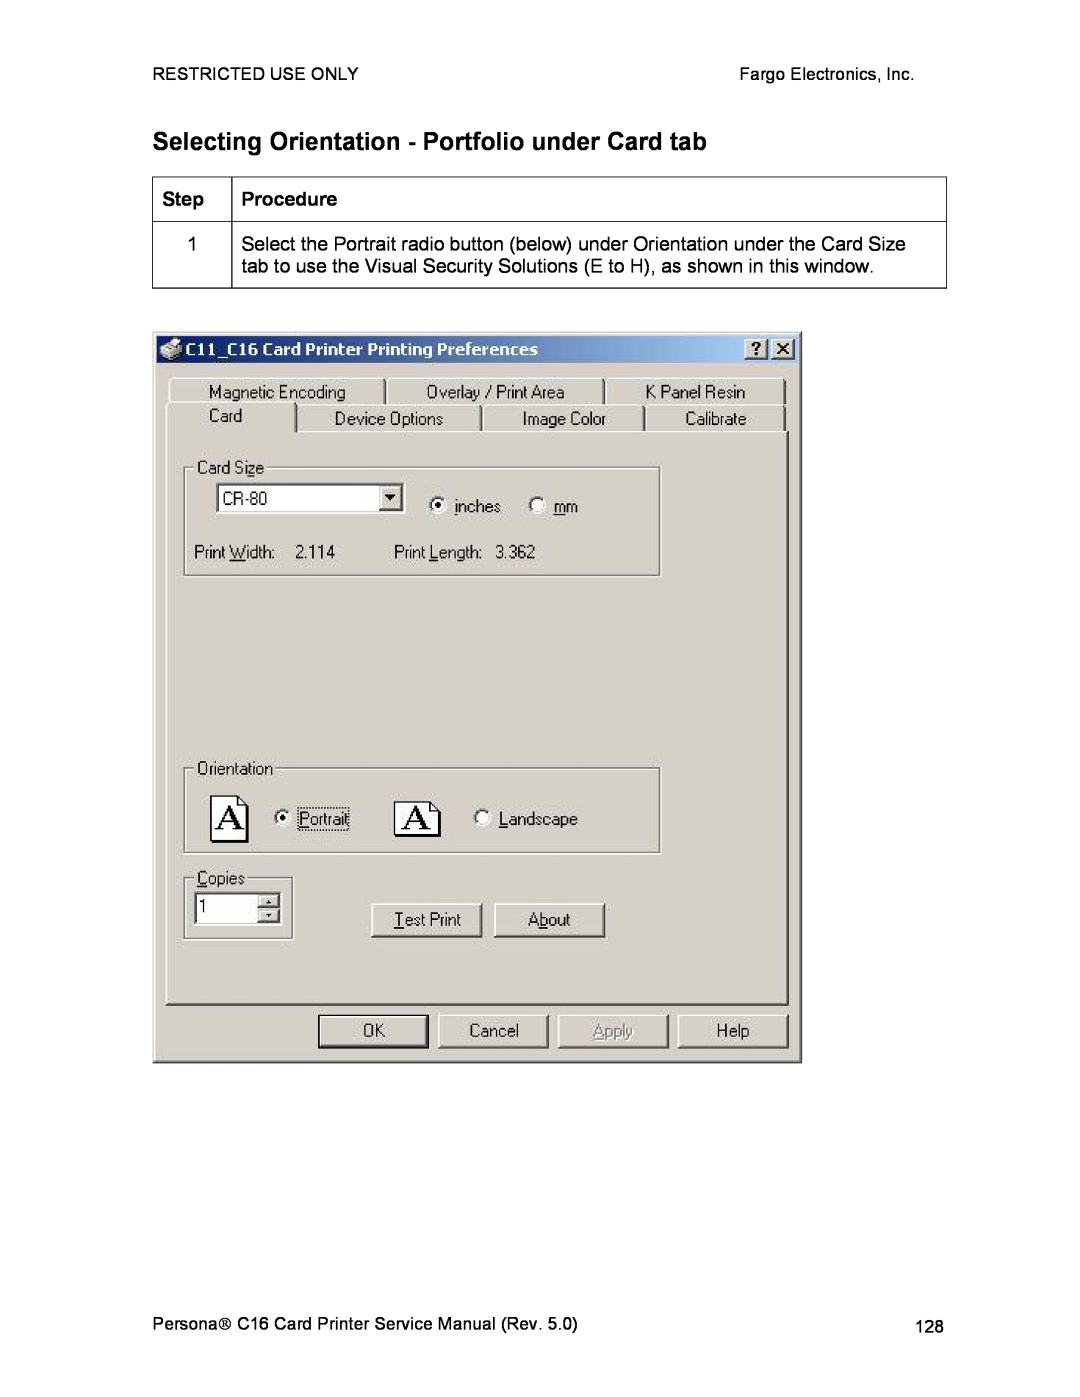 FARGO electronic C16 service manual Selecting Orientation - Portfolio under Card tab, Procedure 